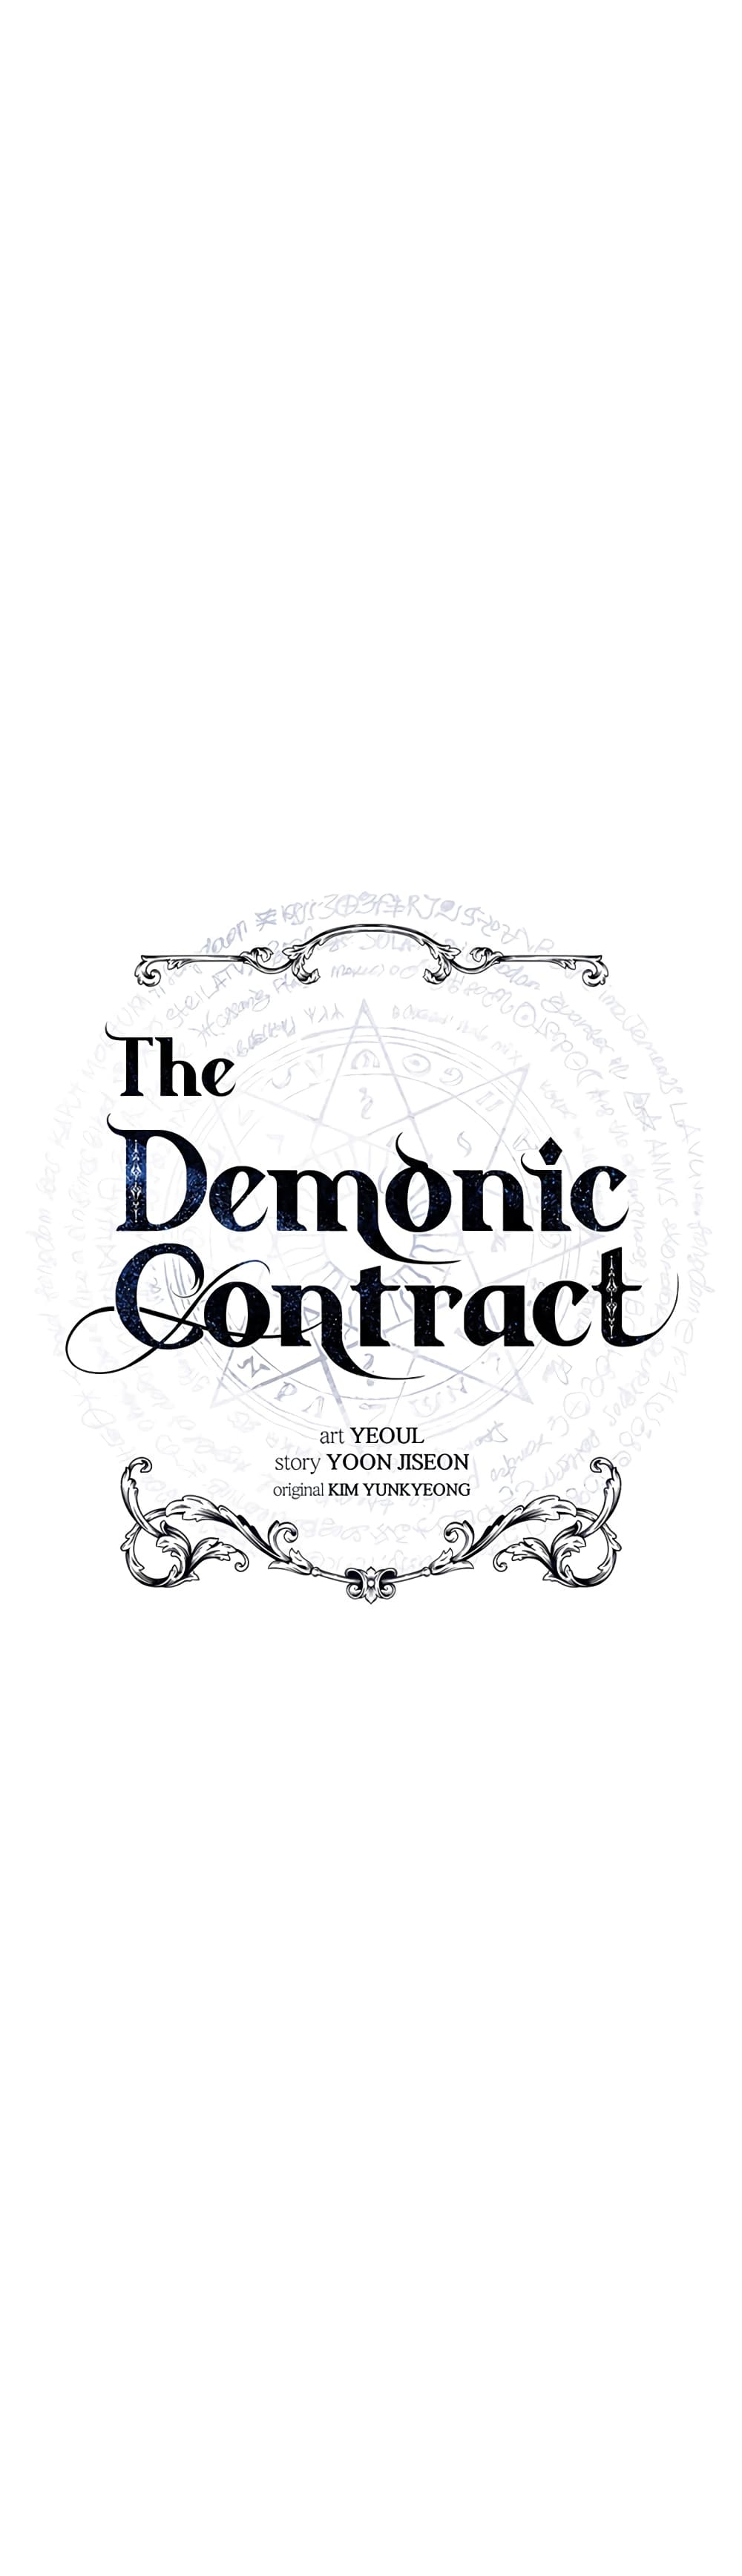 The Demonic Contract 42-42